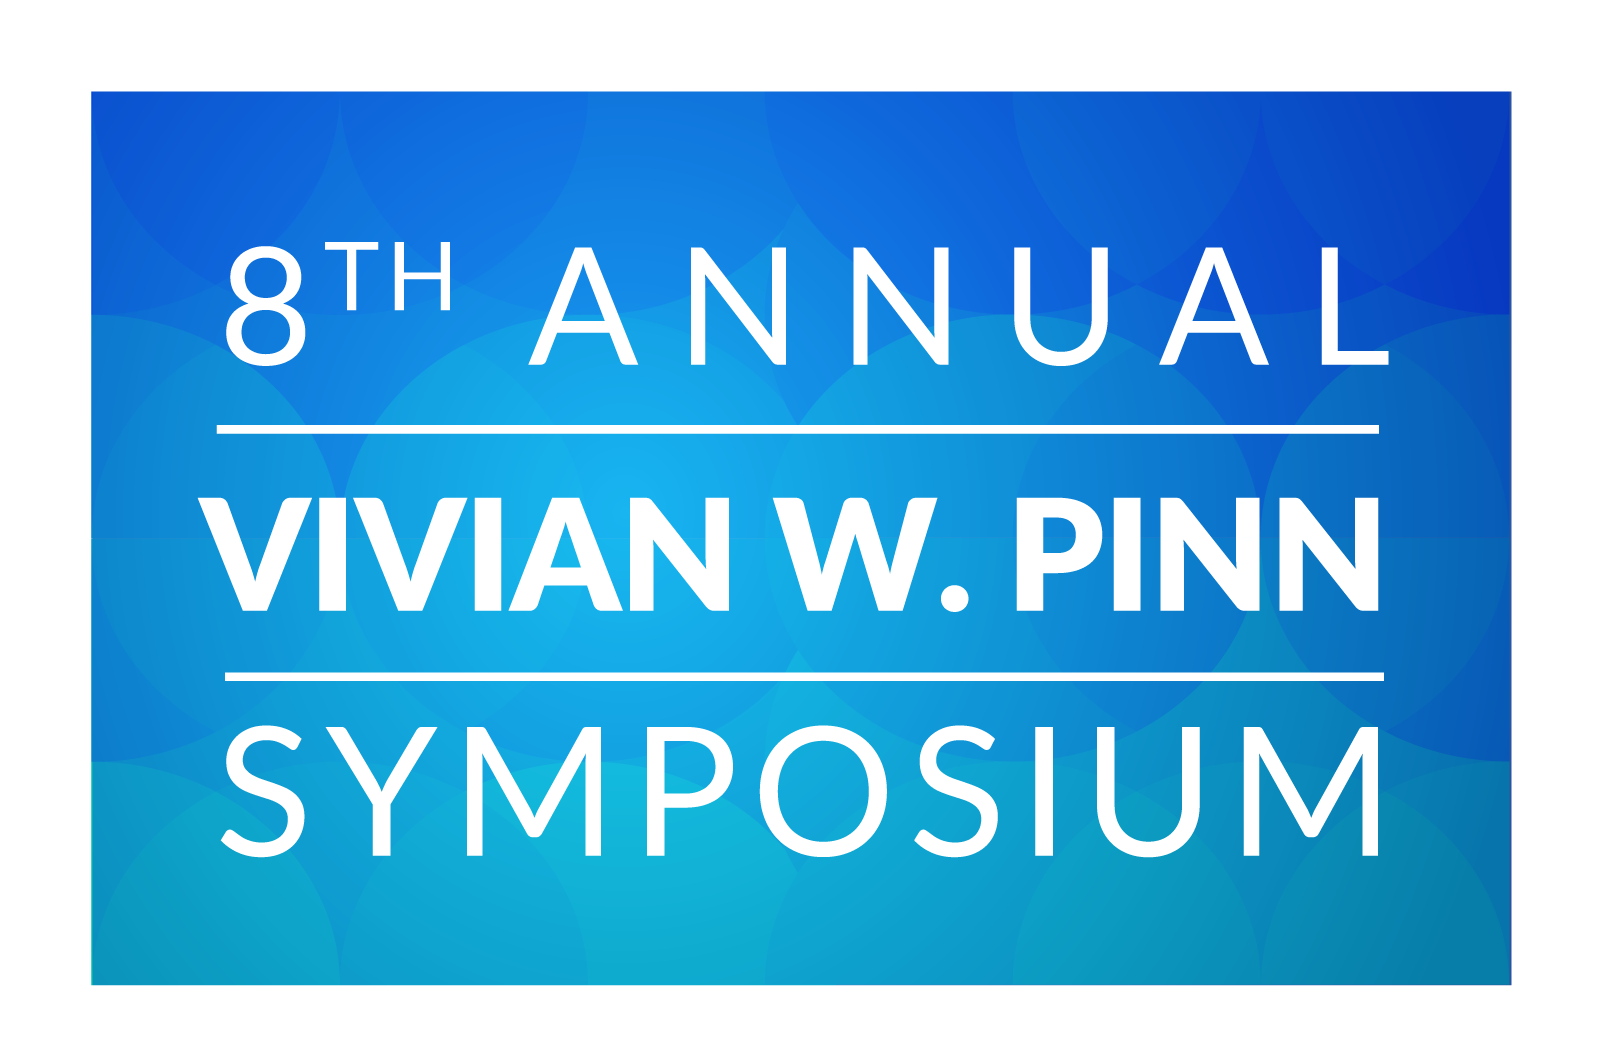 8th Annual Vivian W. Pinn Symposium graphic identifier